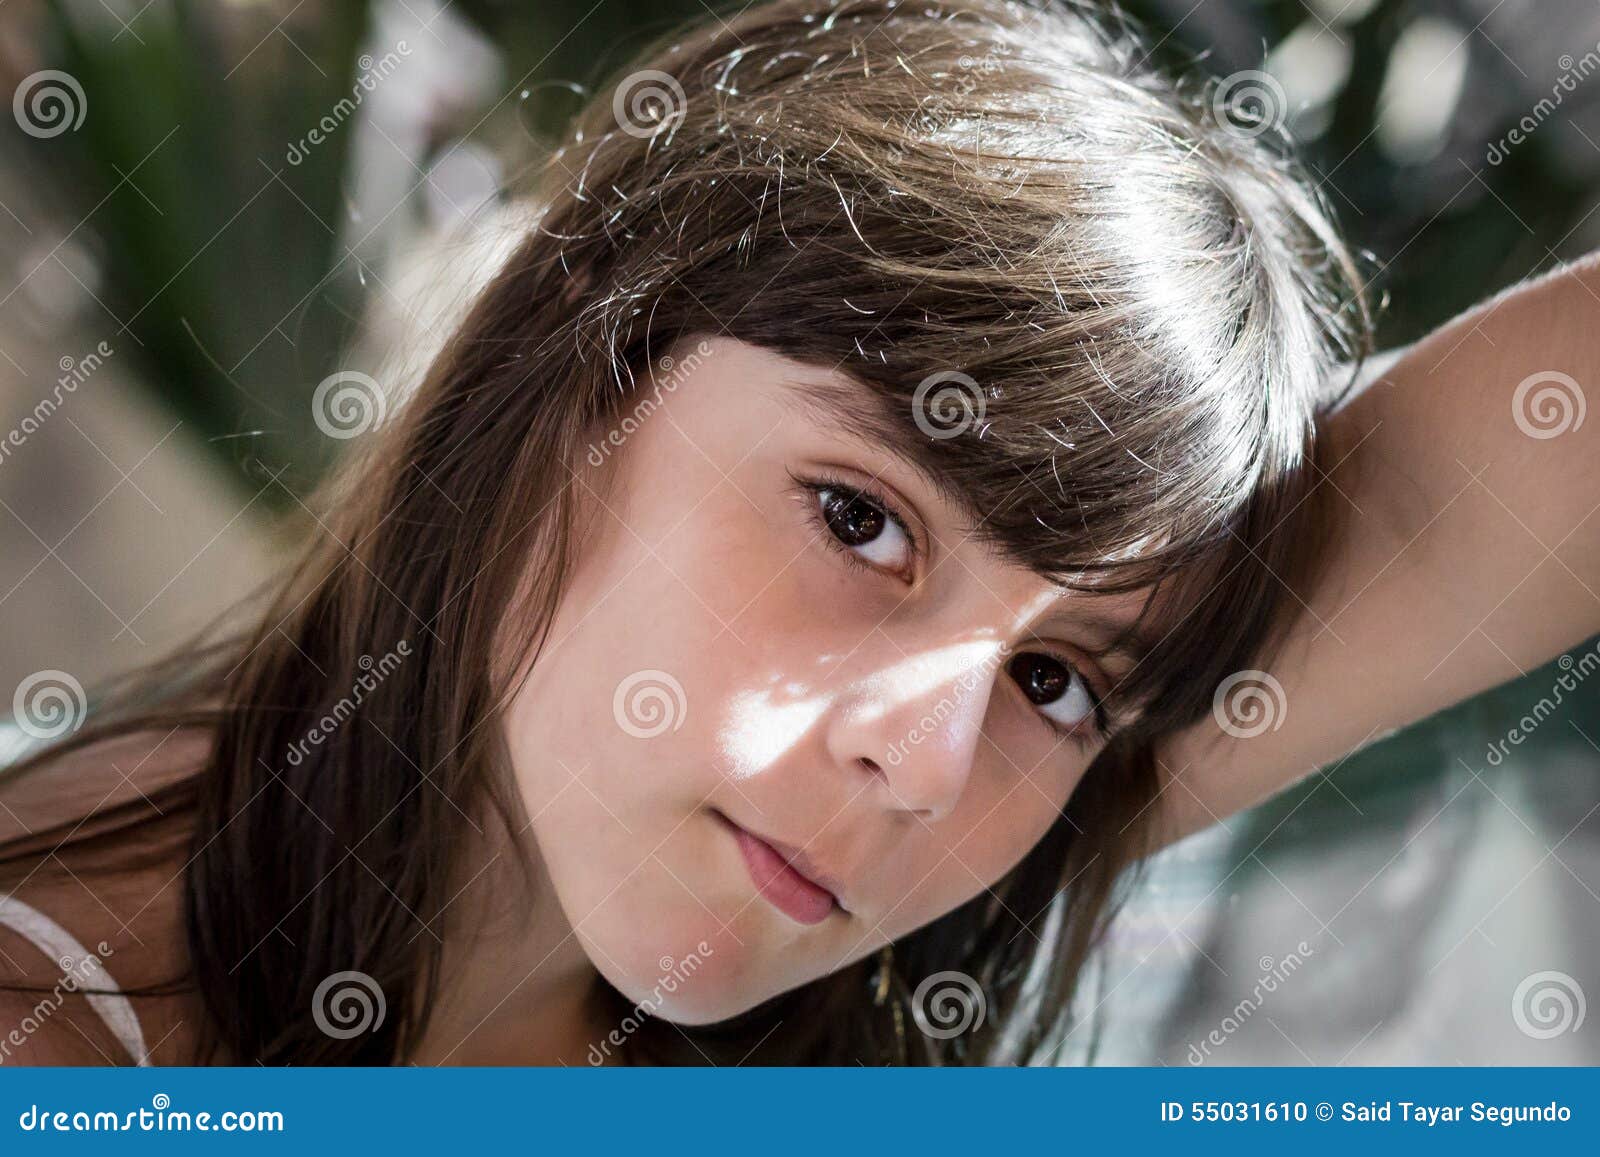 Cute little girl in the <b>ray sun</b> - cute-little-girl-ray-sun-close-up-portrait-55031610